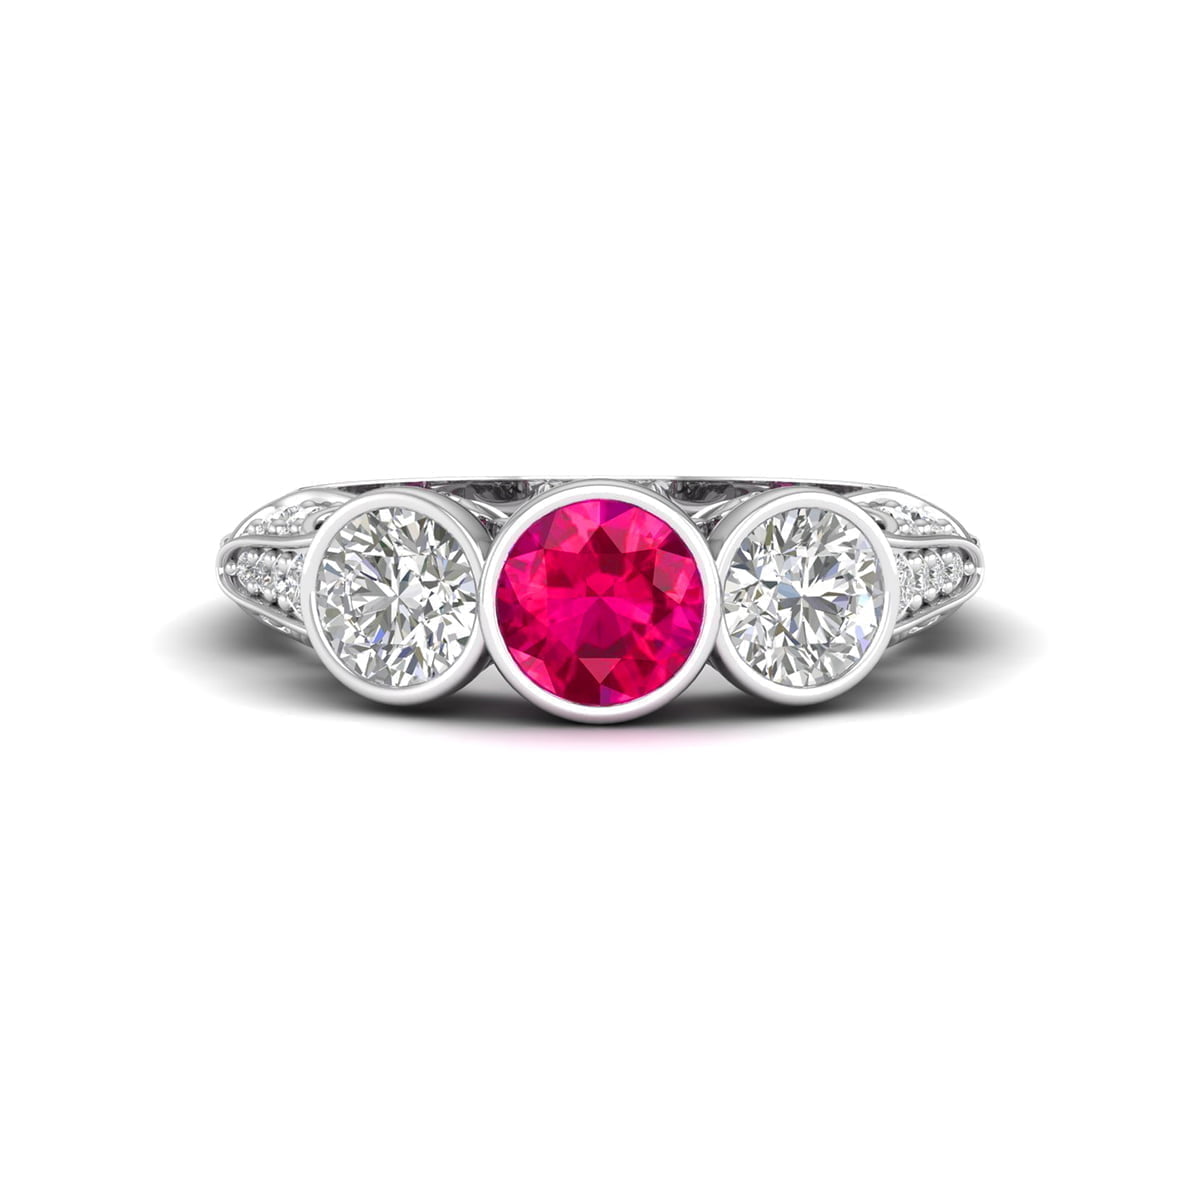 Pink Vintage style Wedding Ring with Three Stone Bezel Set